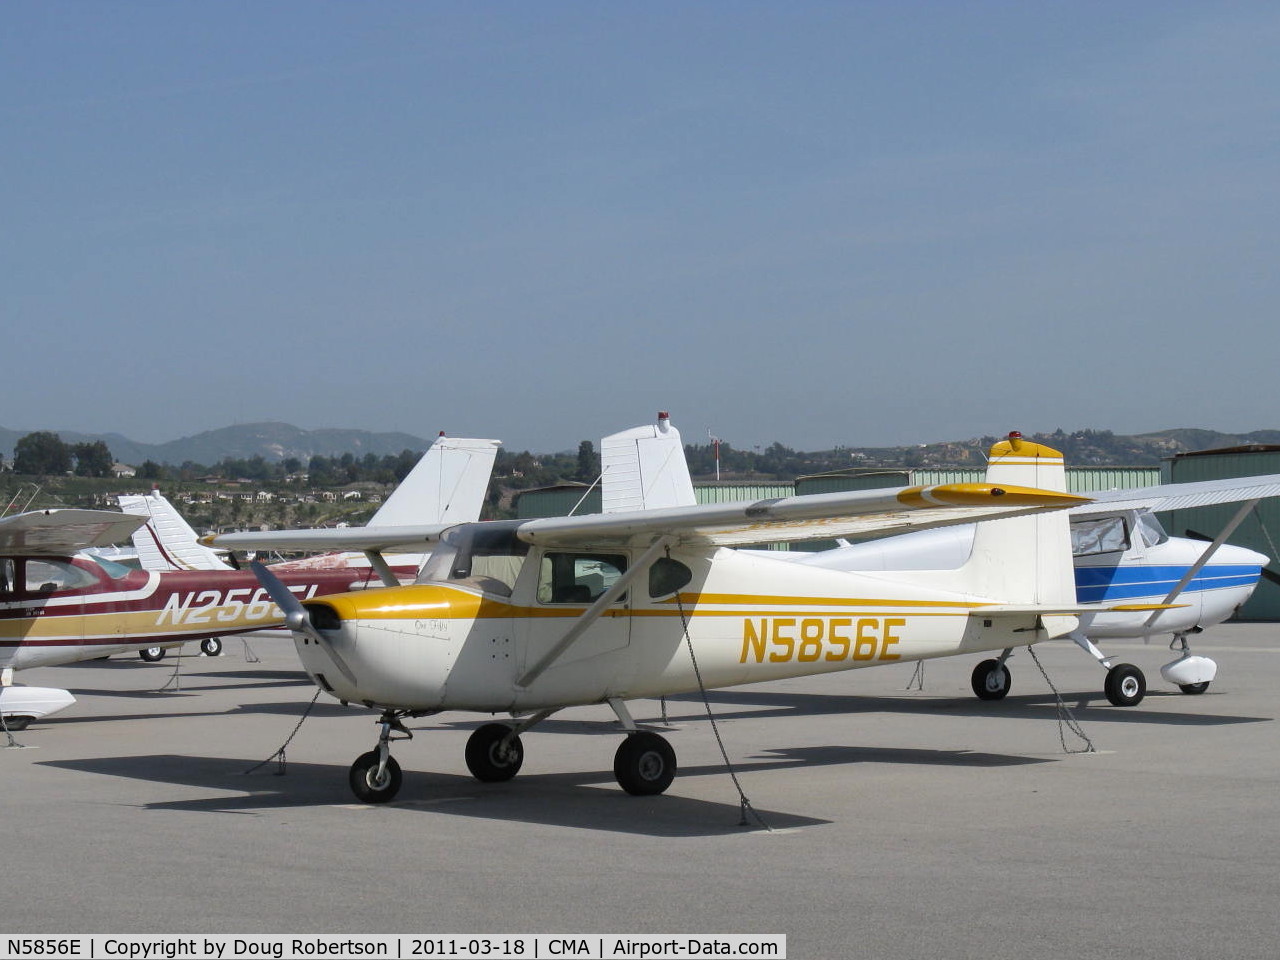 N5856E, 1959 Cessna 150 C/N 17356, 1959 Cessna 150, Continental O-200 100 Hp